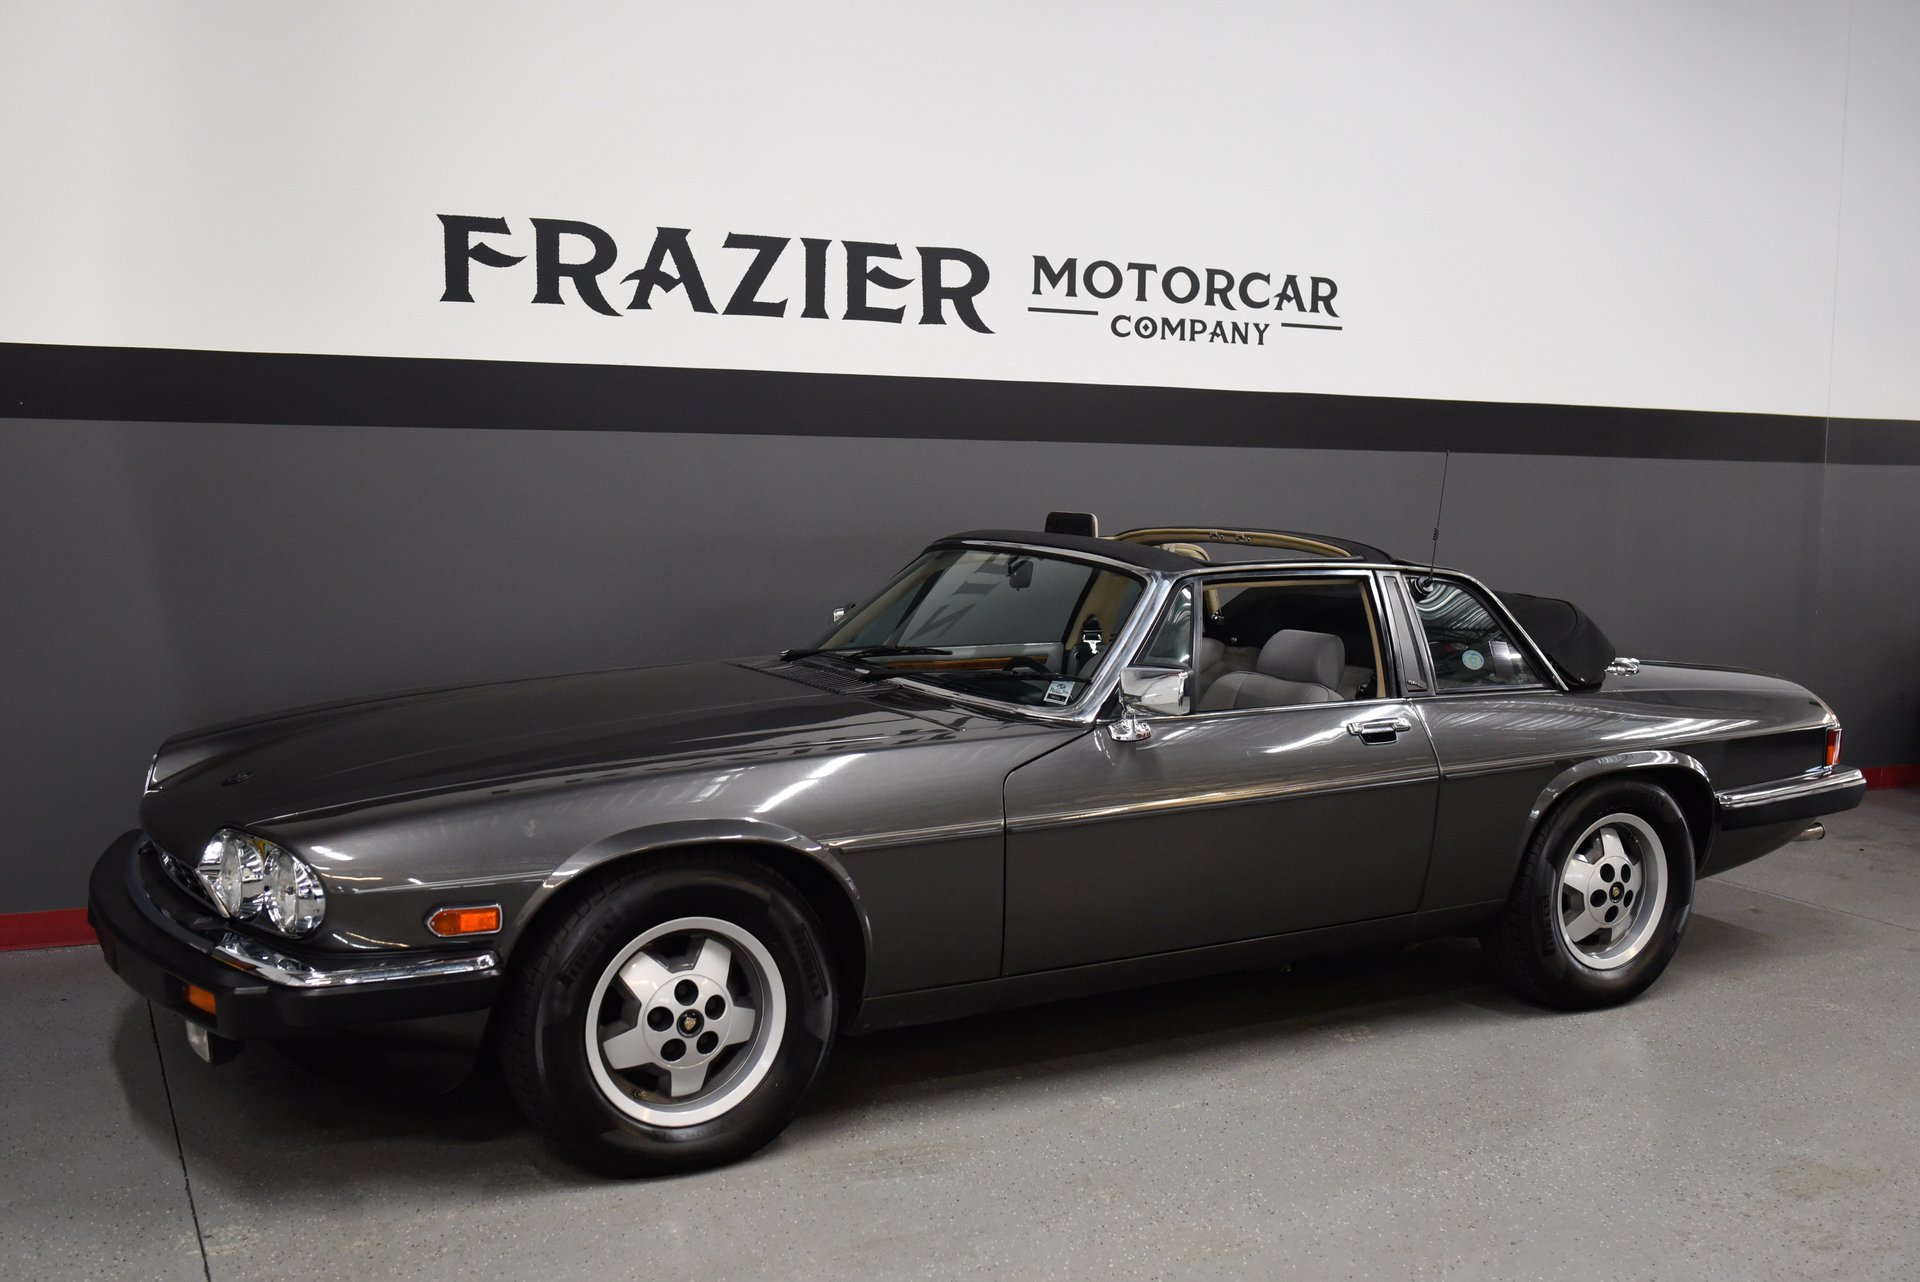 136741 | 1986 Jaguar XJSC | Frazier Motorcar Company